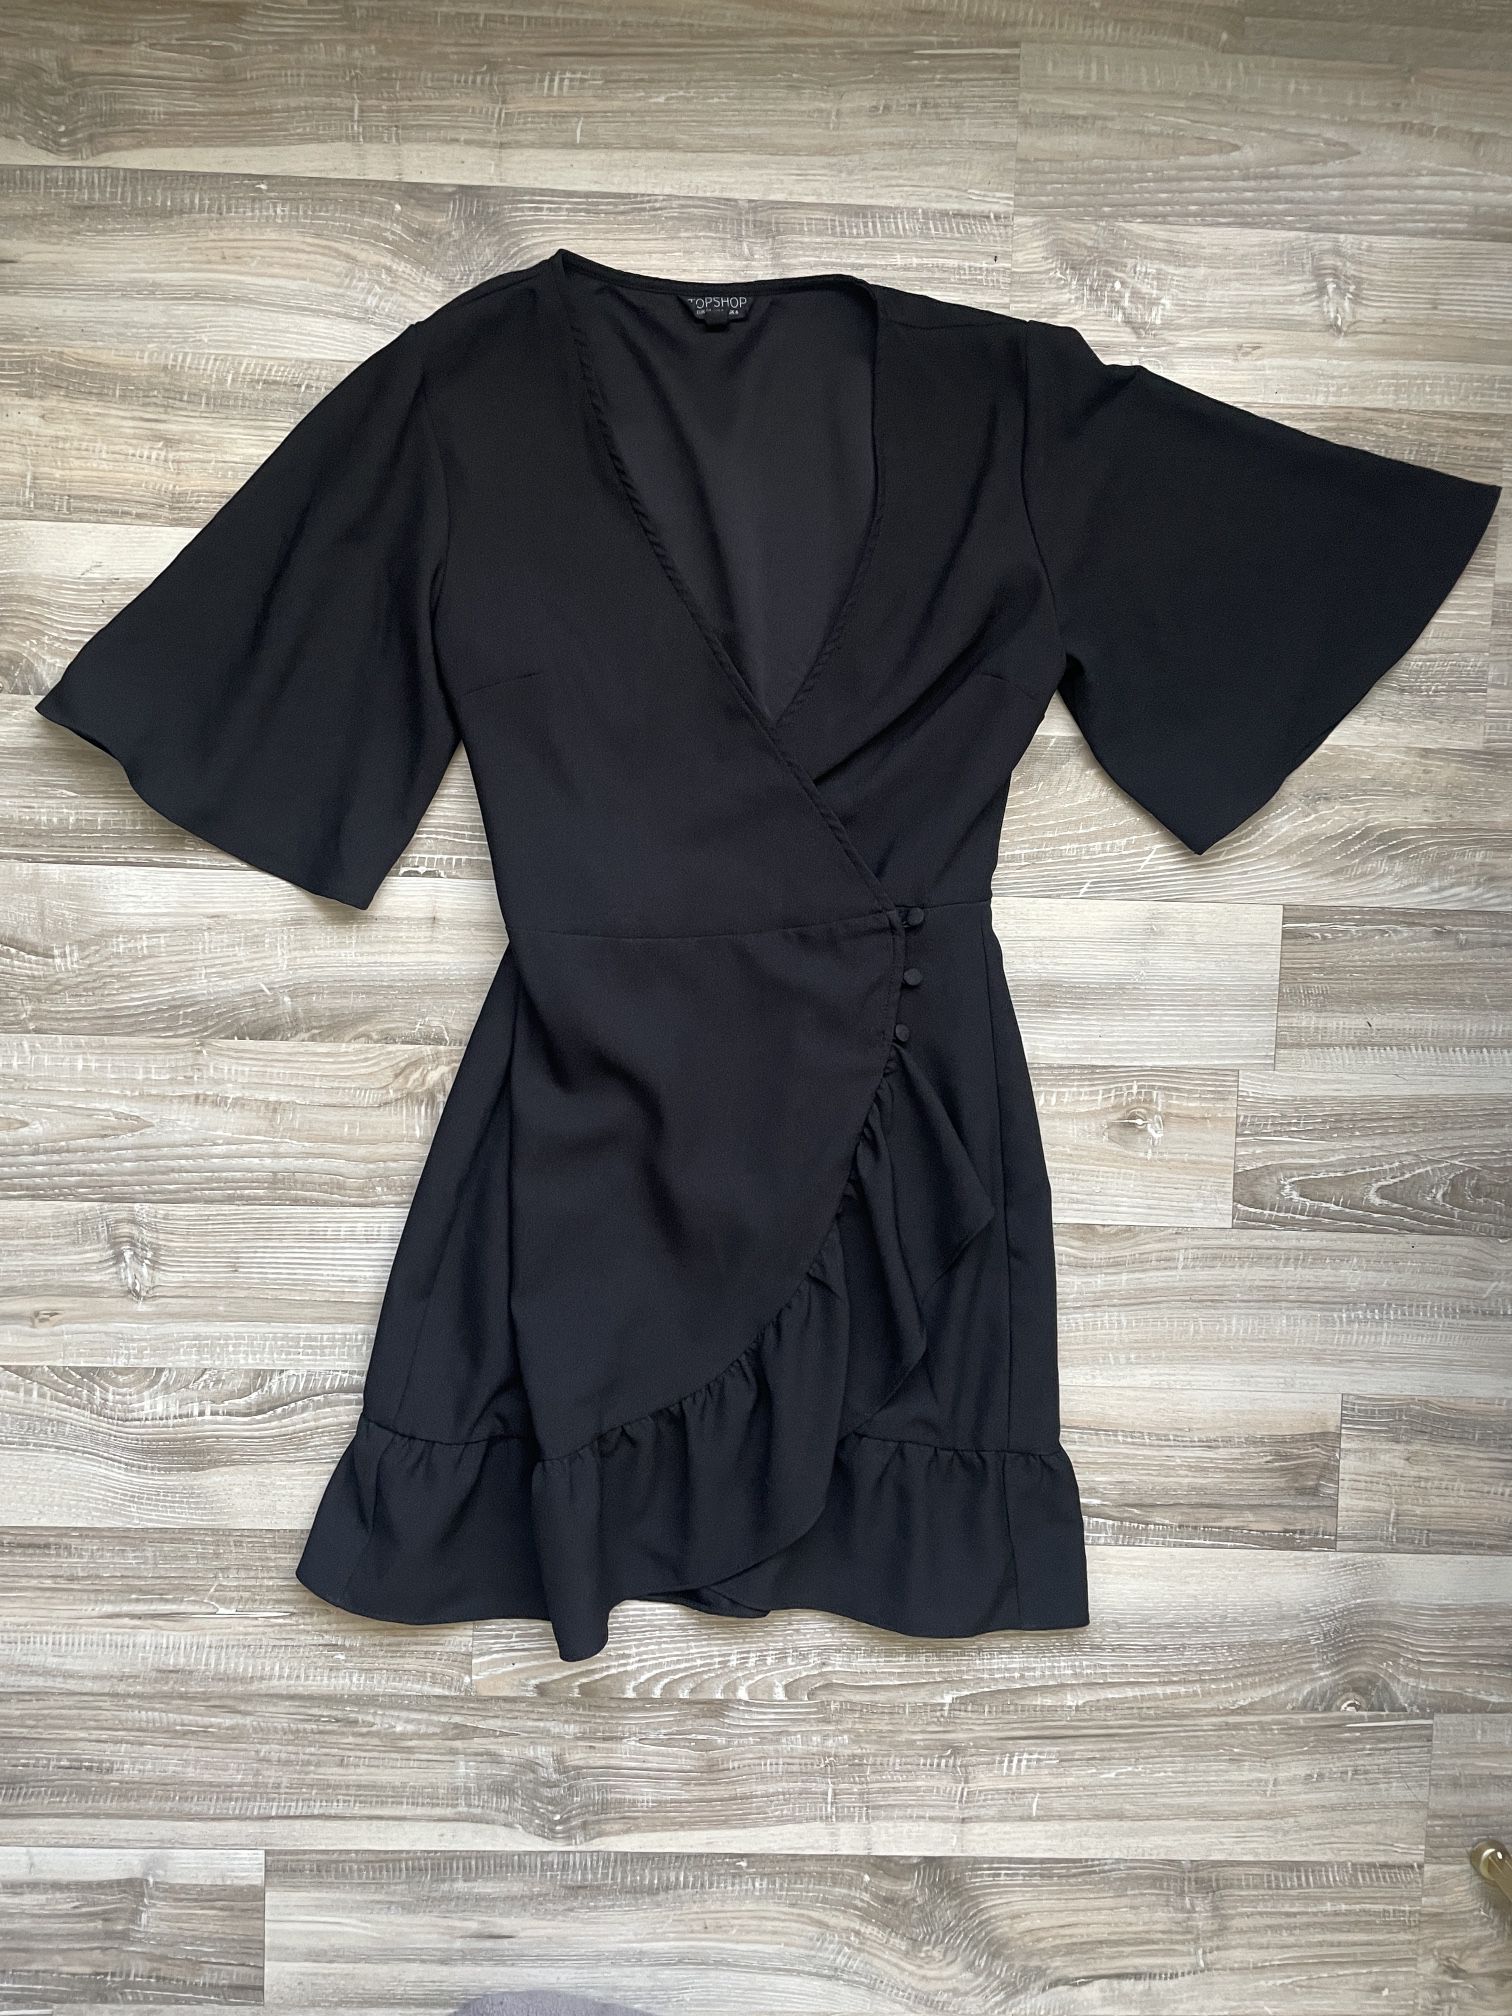 Topshop Bell Sleeve Black Wrap VNeck Dress Size 2 Black Solid Ruffle Polyester